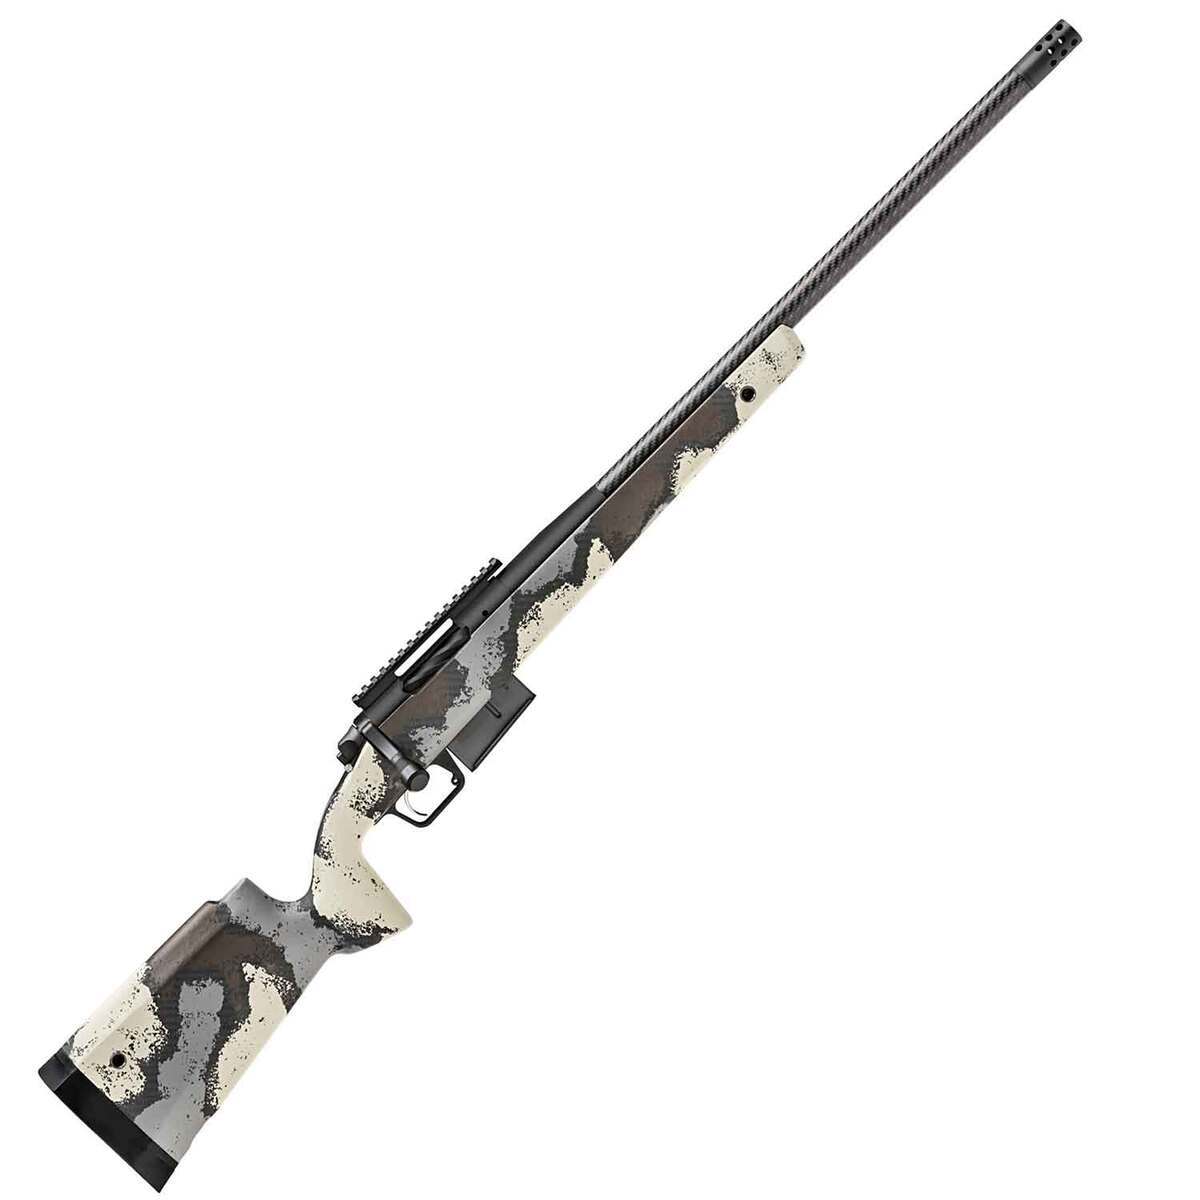 https://www.sportsmans.com/medias/springfield-armory-model-2020-waypoint-carbon-fiberridgeline-camo-bolt-action-rifle-65-prc-24in-1671887-1.jpg?context=bWFzdGVyfGltYWdlc3w0MjcwNXxpbWFnZS9qcGVnfGhmOS9oNzkvMTExNjgwNjU2NTA3MTgvMTY3MTg4Ny0xX2Jhc2UtY29udmVyc2lvbkZvcm1hdF8xMjAwLWNvbnZlcnNpb25Gb3JtYXR8MWJjYWQwZTVjZmE4ZTQwM2M0YjQ4YTE2NDY0MjNkZTRkZWE1YjExMmMxNTdiNTZkNTQ4M2UwN2QzN2ZhNTVhNQ